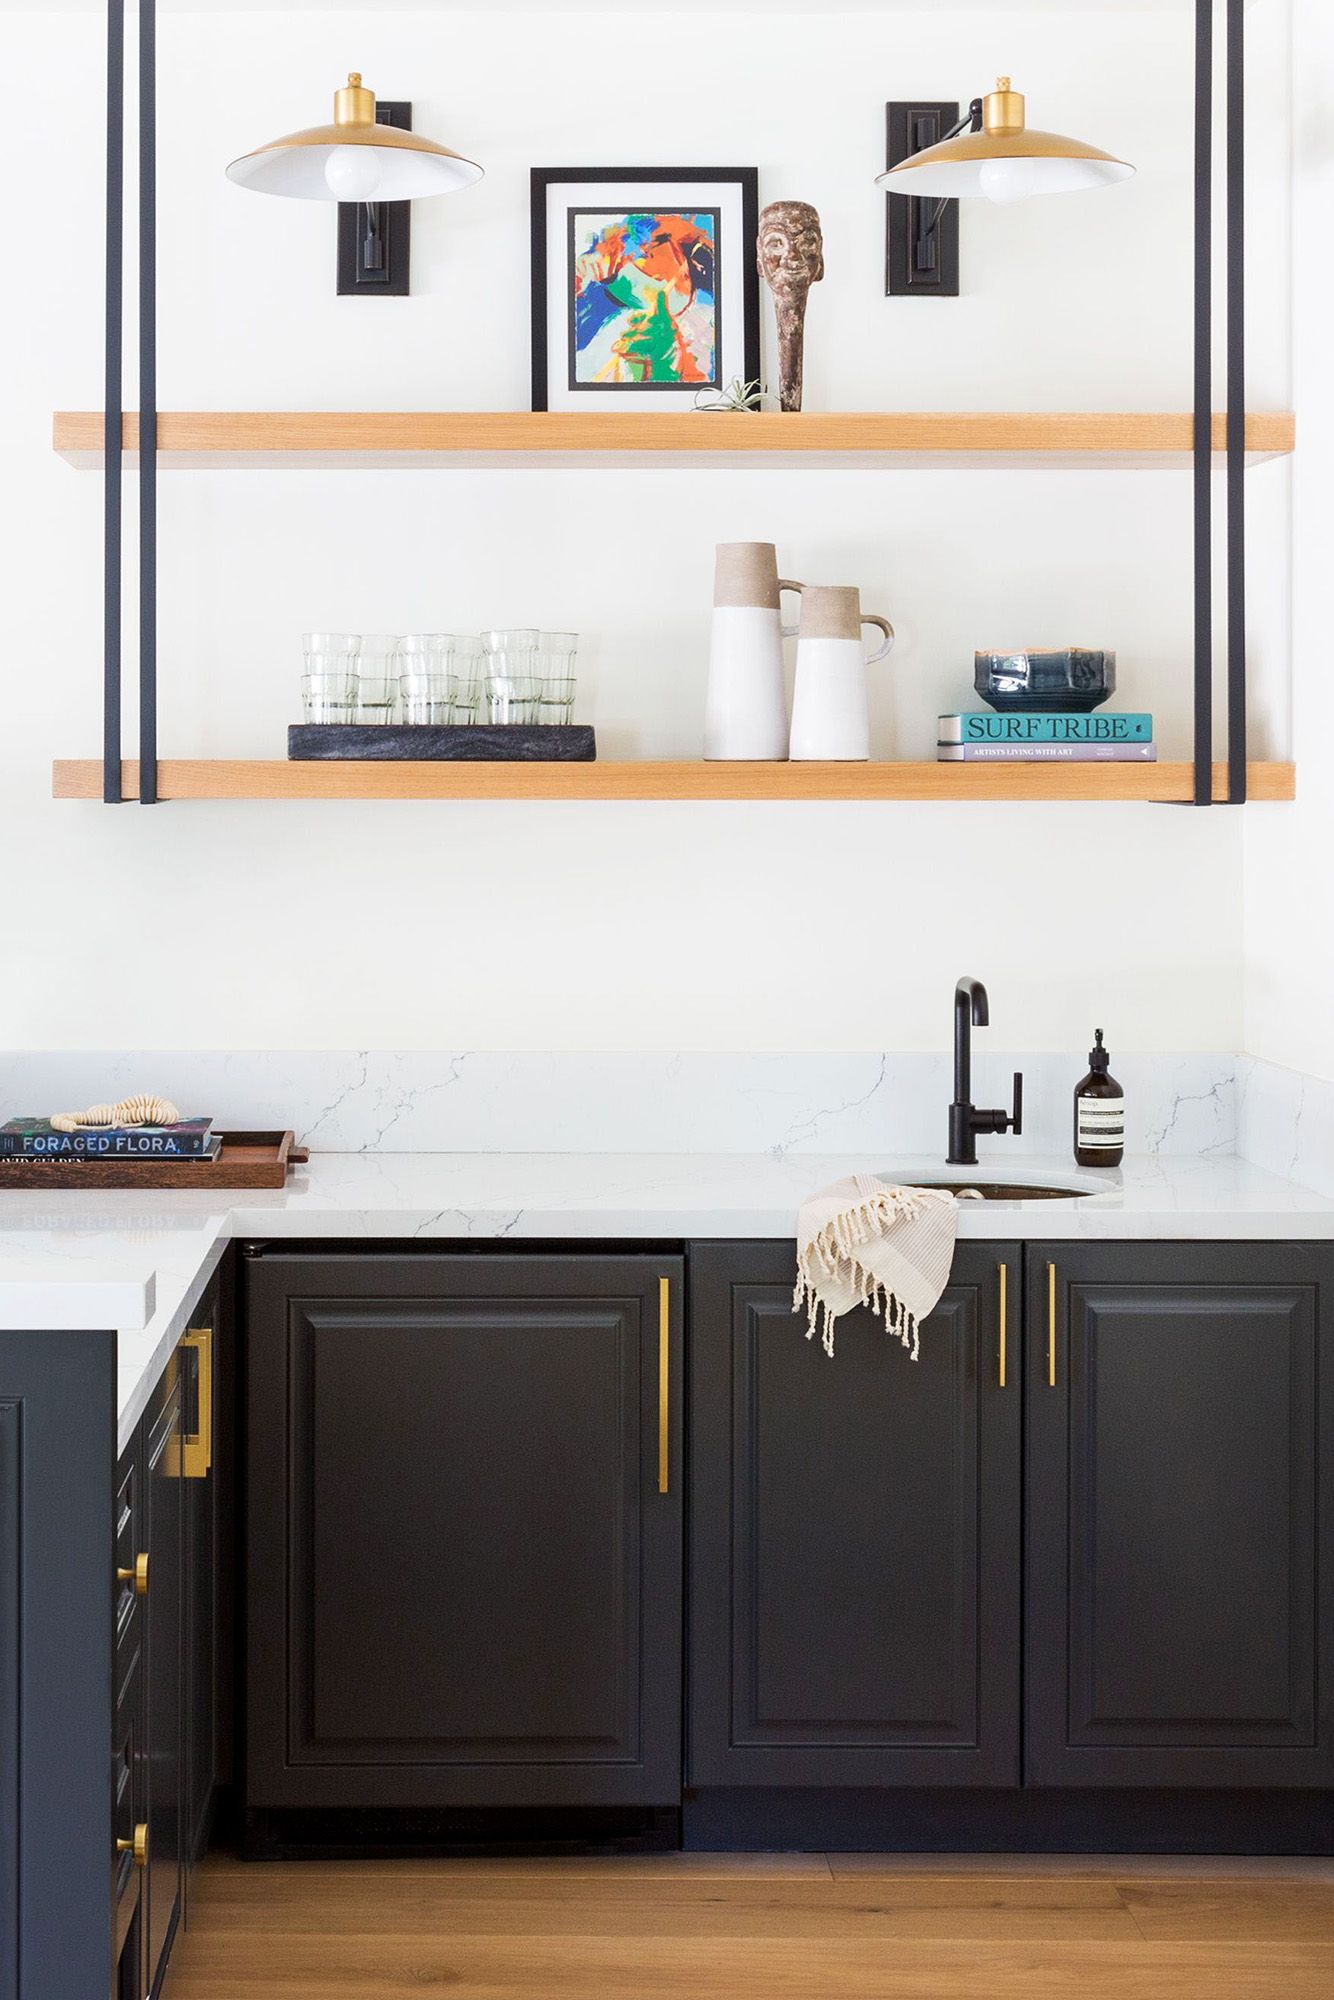 18 Best Small Kitchen Design Ideas   Small Kitchens Photo Gallery